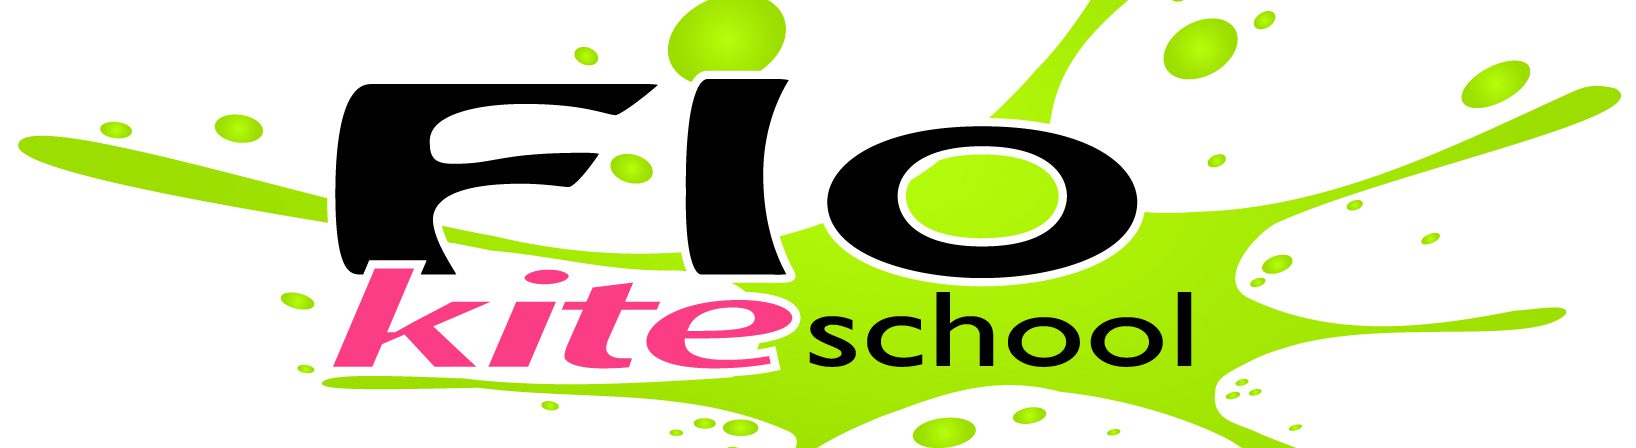 logo Flokiteschool